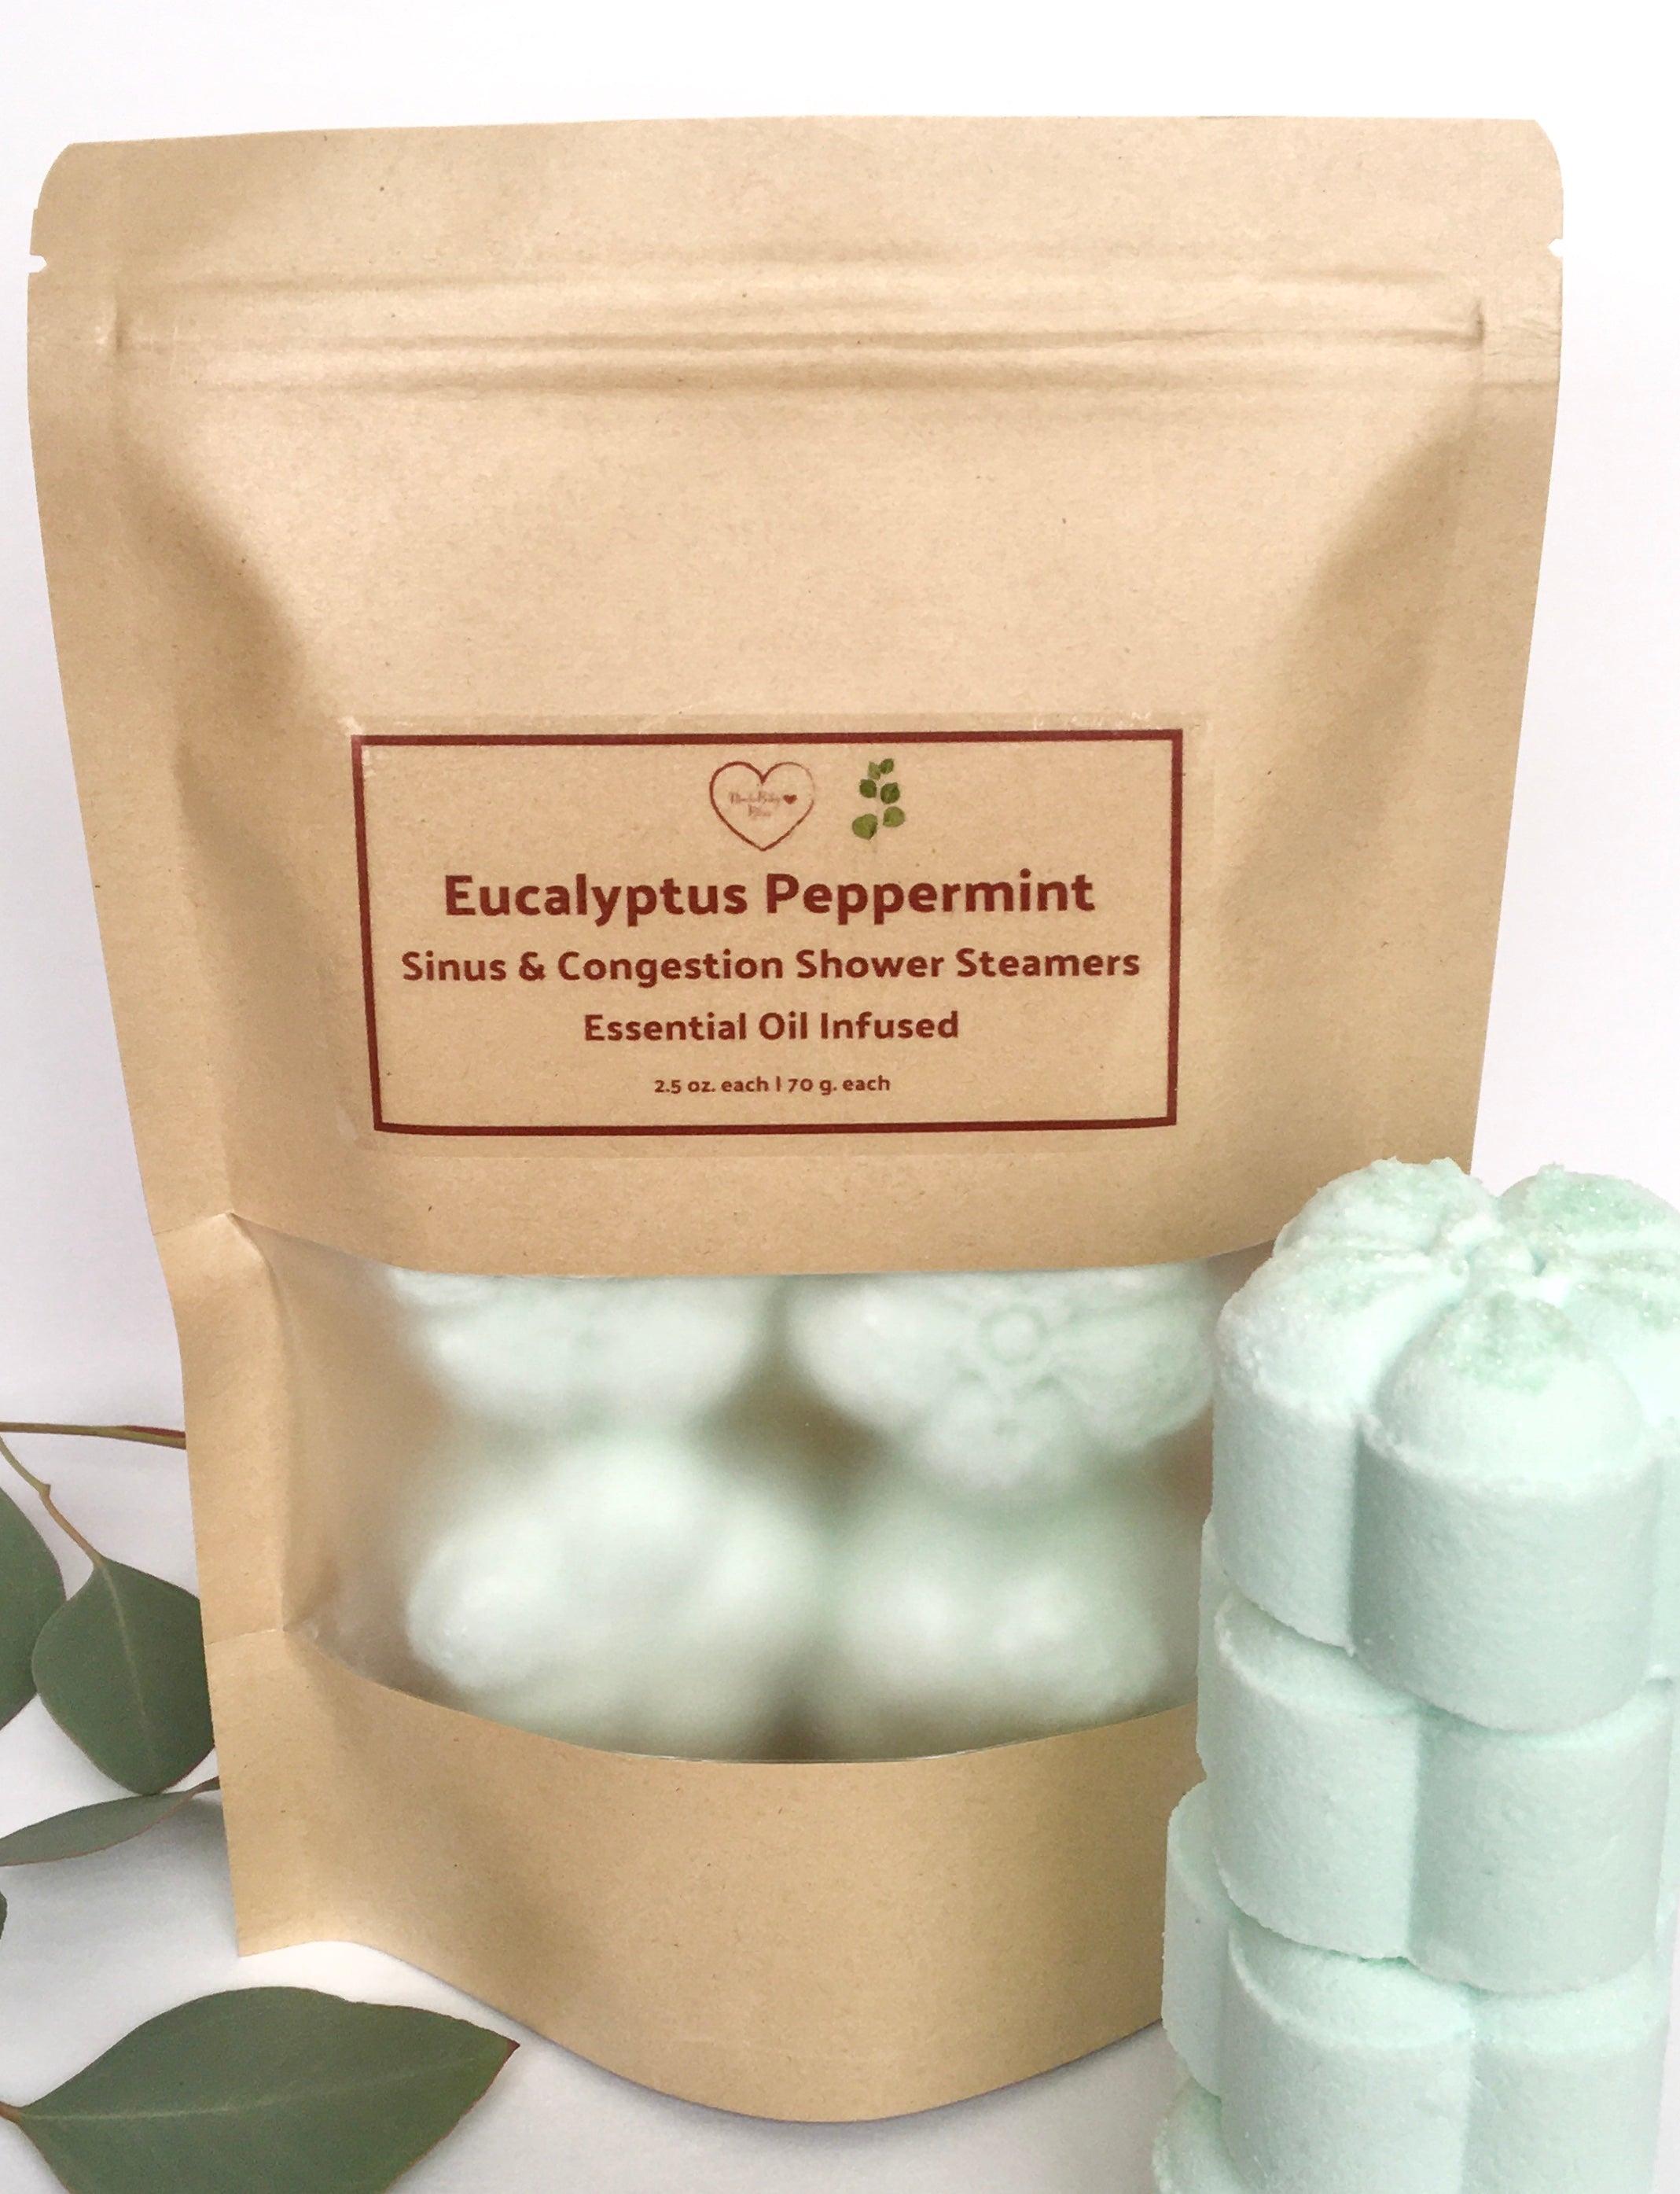 Eucalyptus Peppermint Shower Steamers | Sinus & Congestion - 4 pack |  8 pack